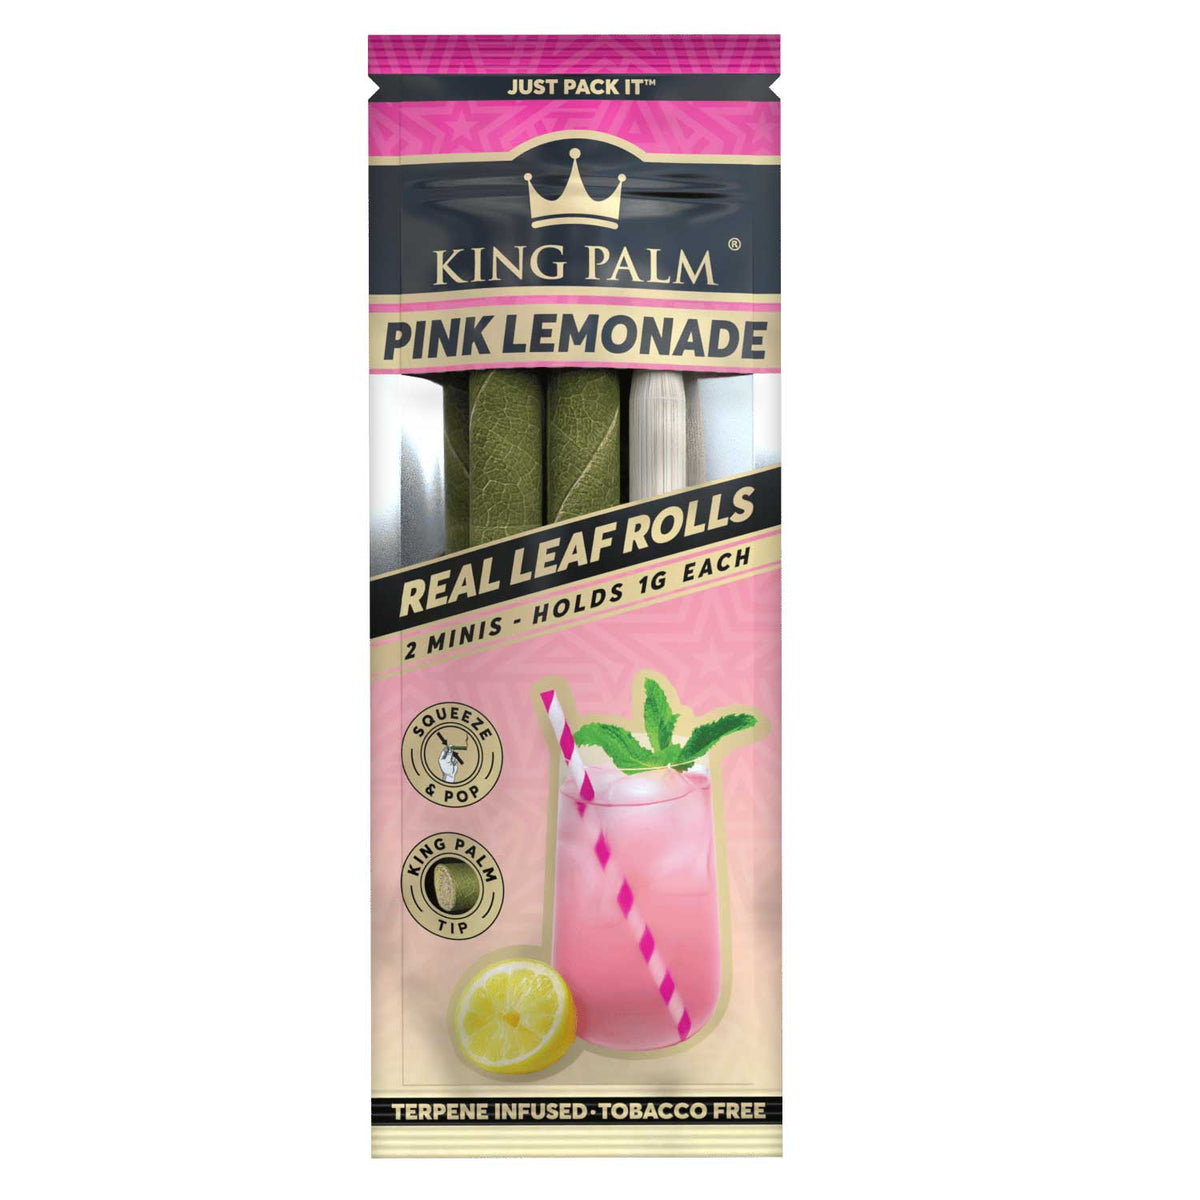 King Palm 2 Mini Rolls - Pink Lemonade Flavor